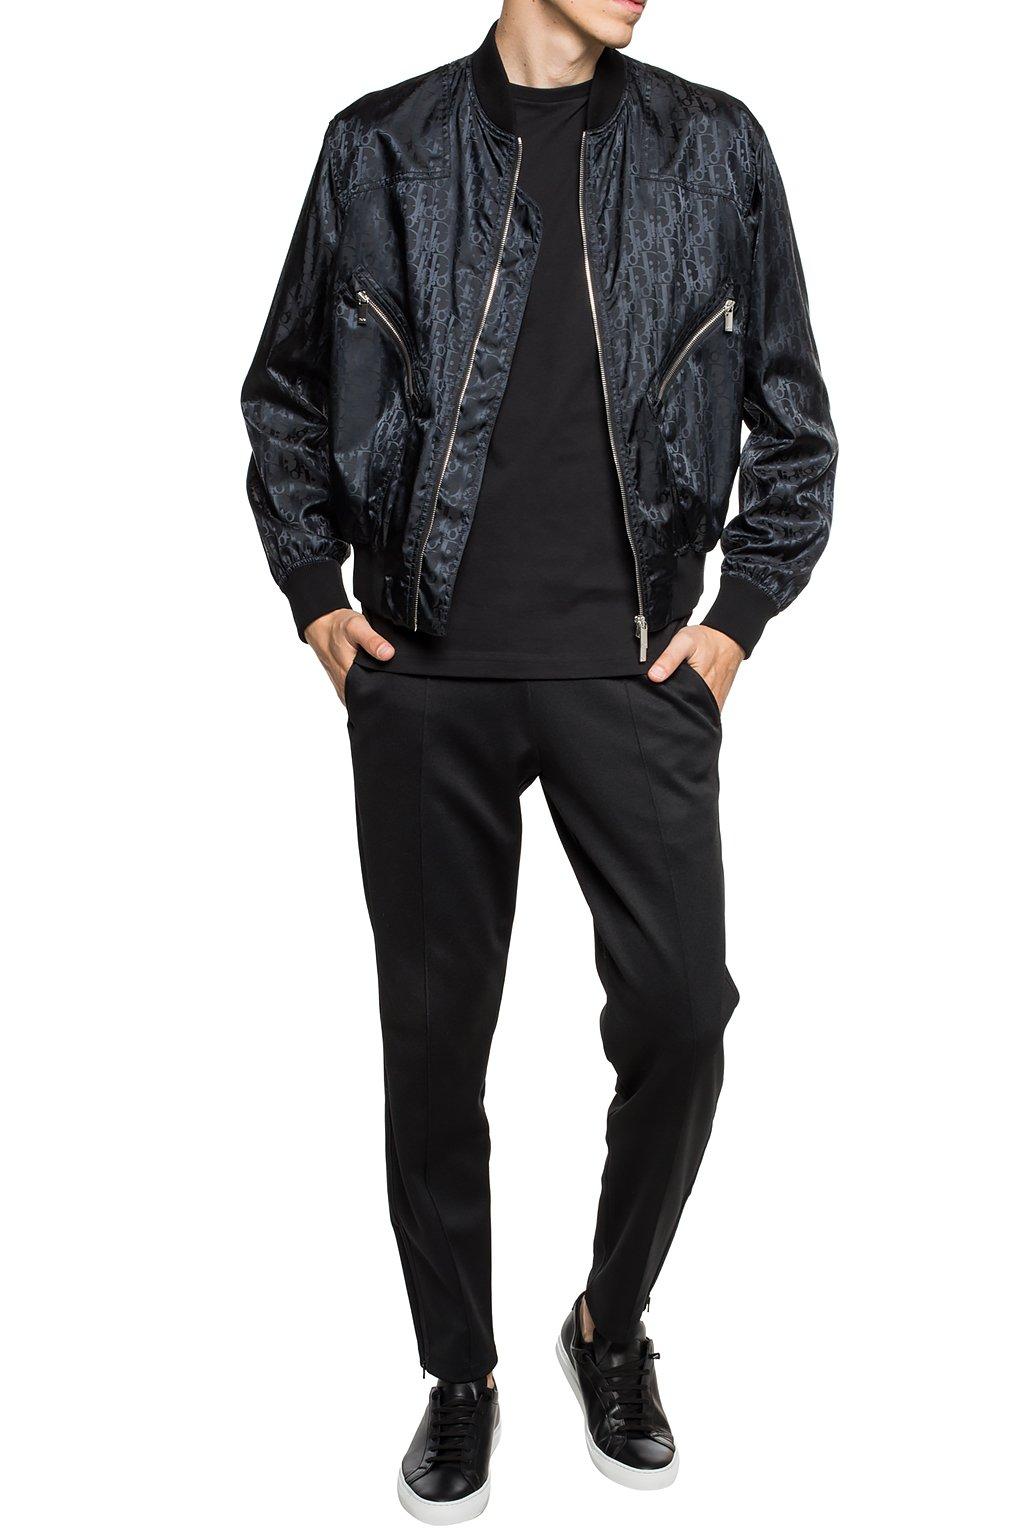 Dior Synthetic Branded Bomber Jacket in Black for Men - Lyst